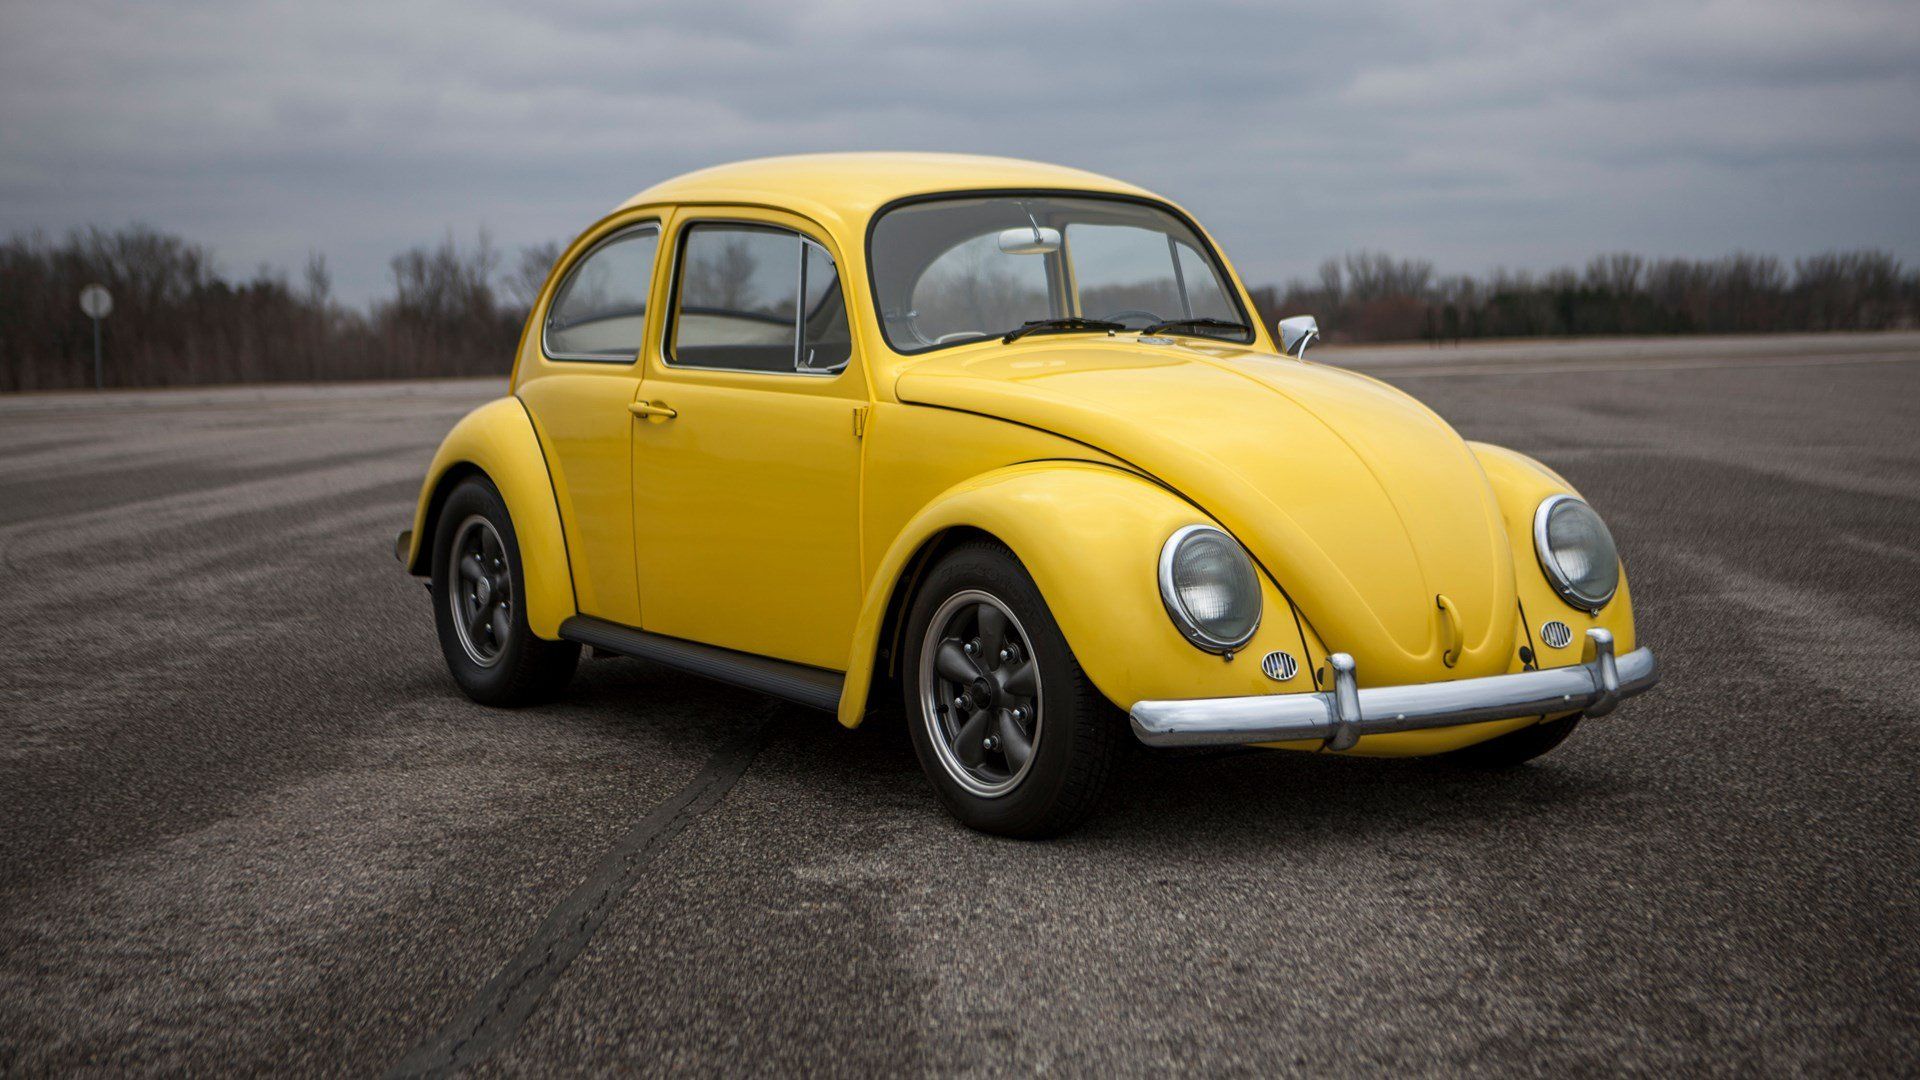 Yellow VW Beetle parked on asphalt